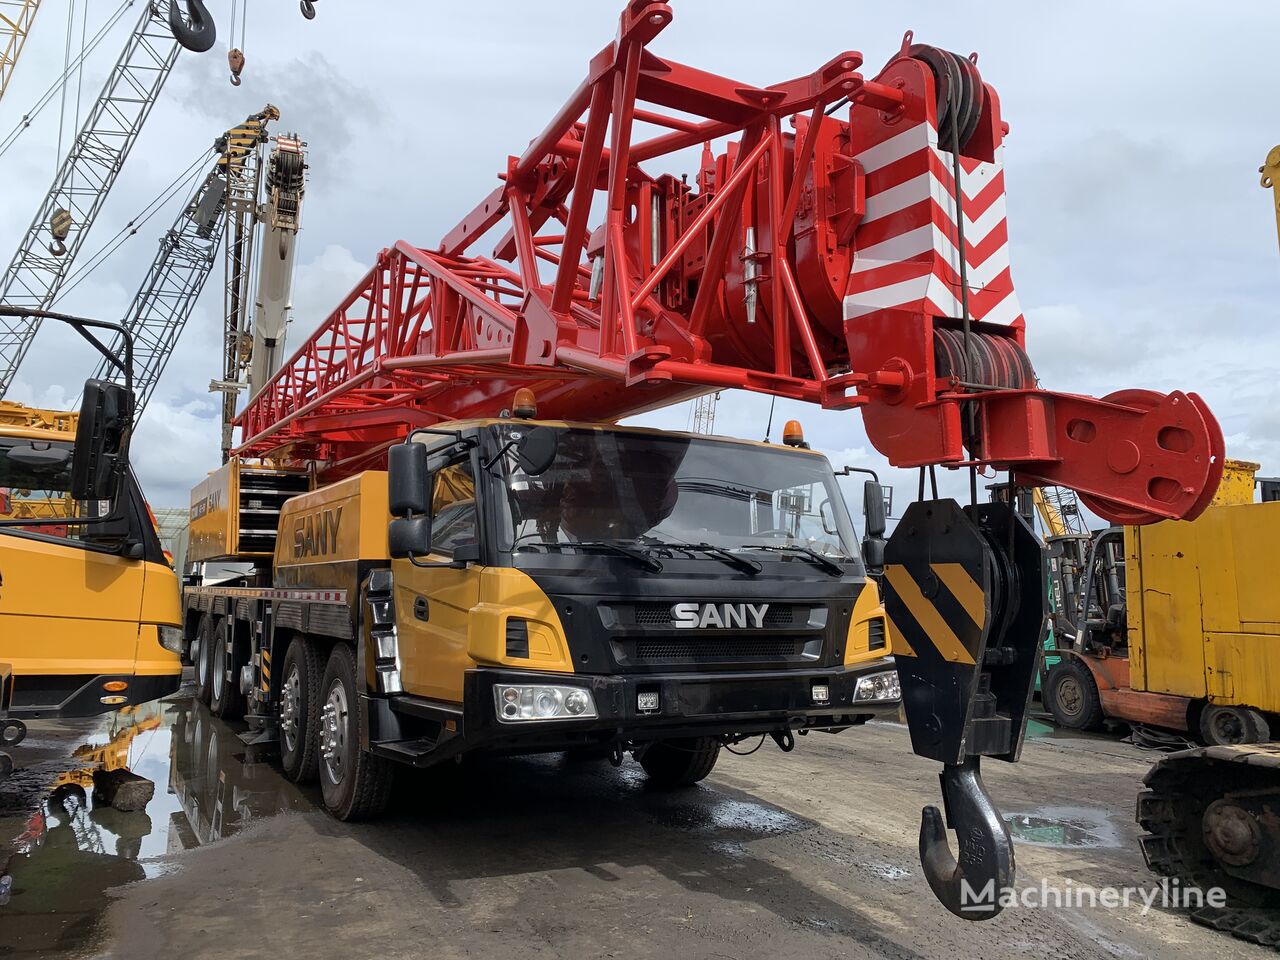 автокран Sany Sany STC1000 used 100 ton hydraulic mounted mobile truck crane